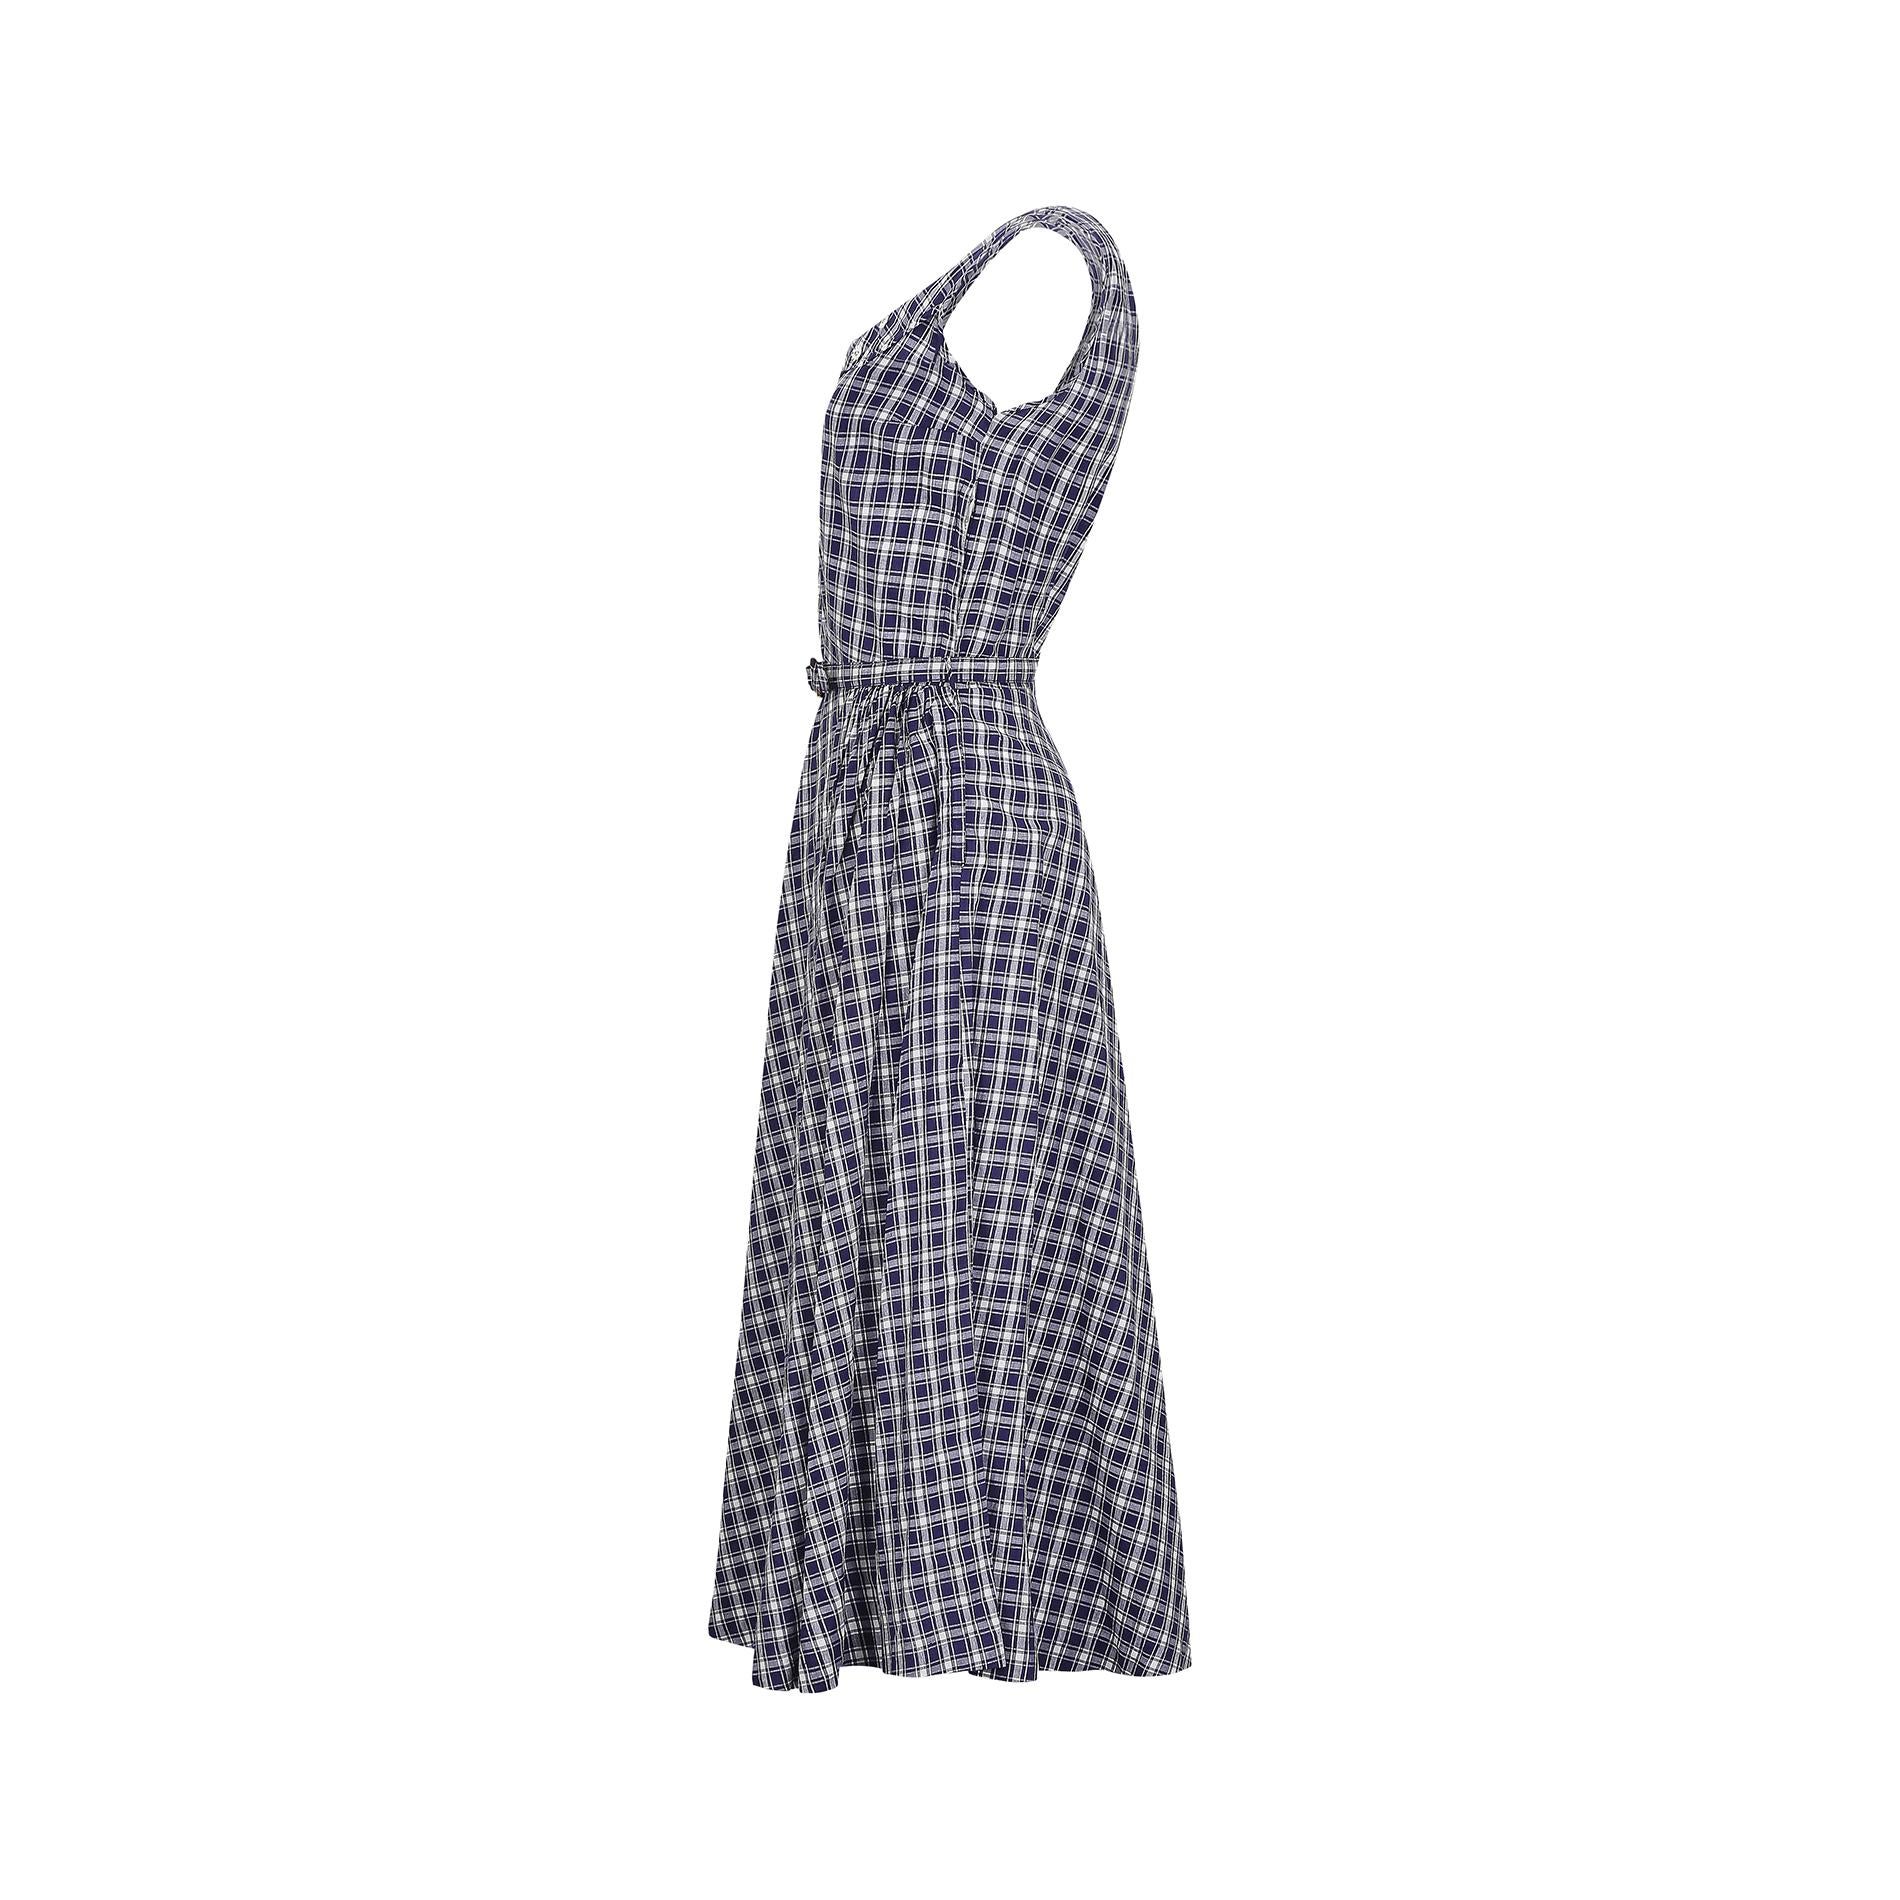 1950s gingham dress